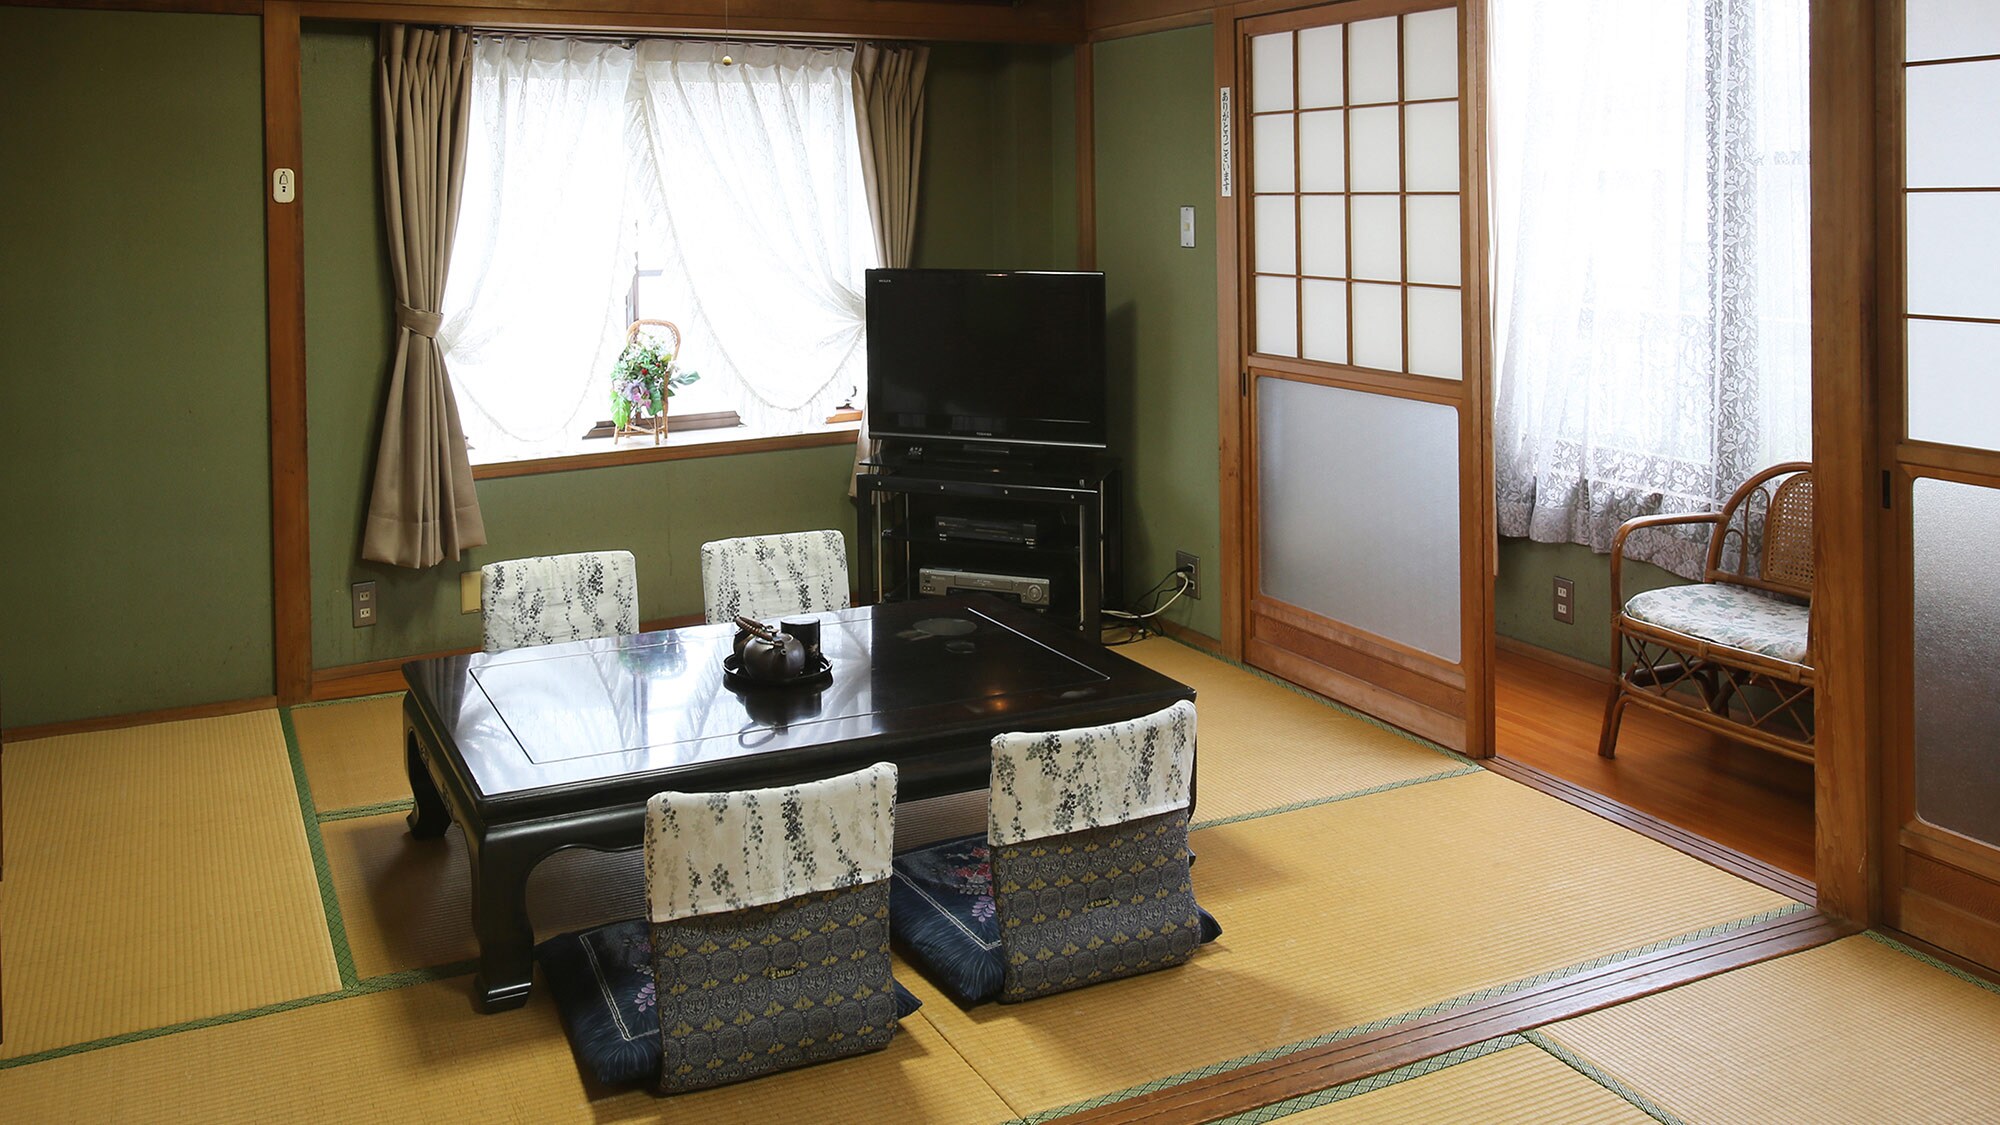 ・ Japanese-style room 12 tatami mats